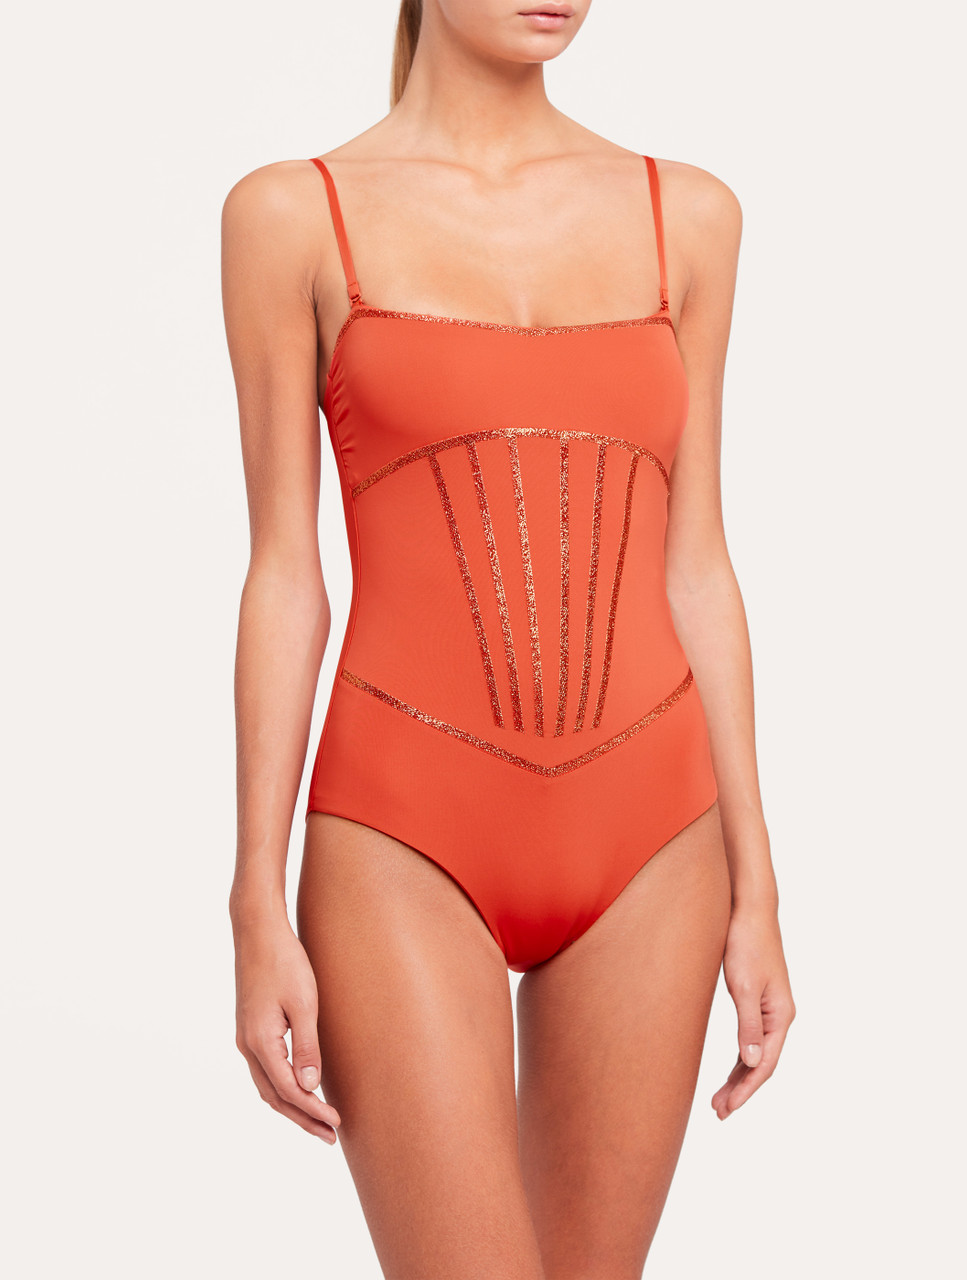 Orange swimsuit with metallic embroidery - La Perla - US